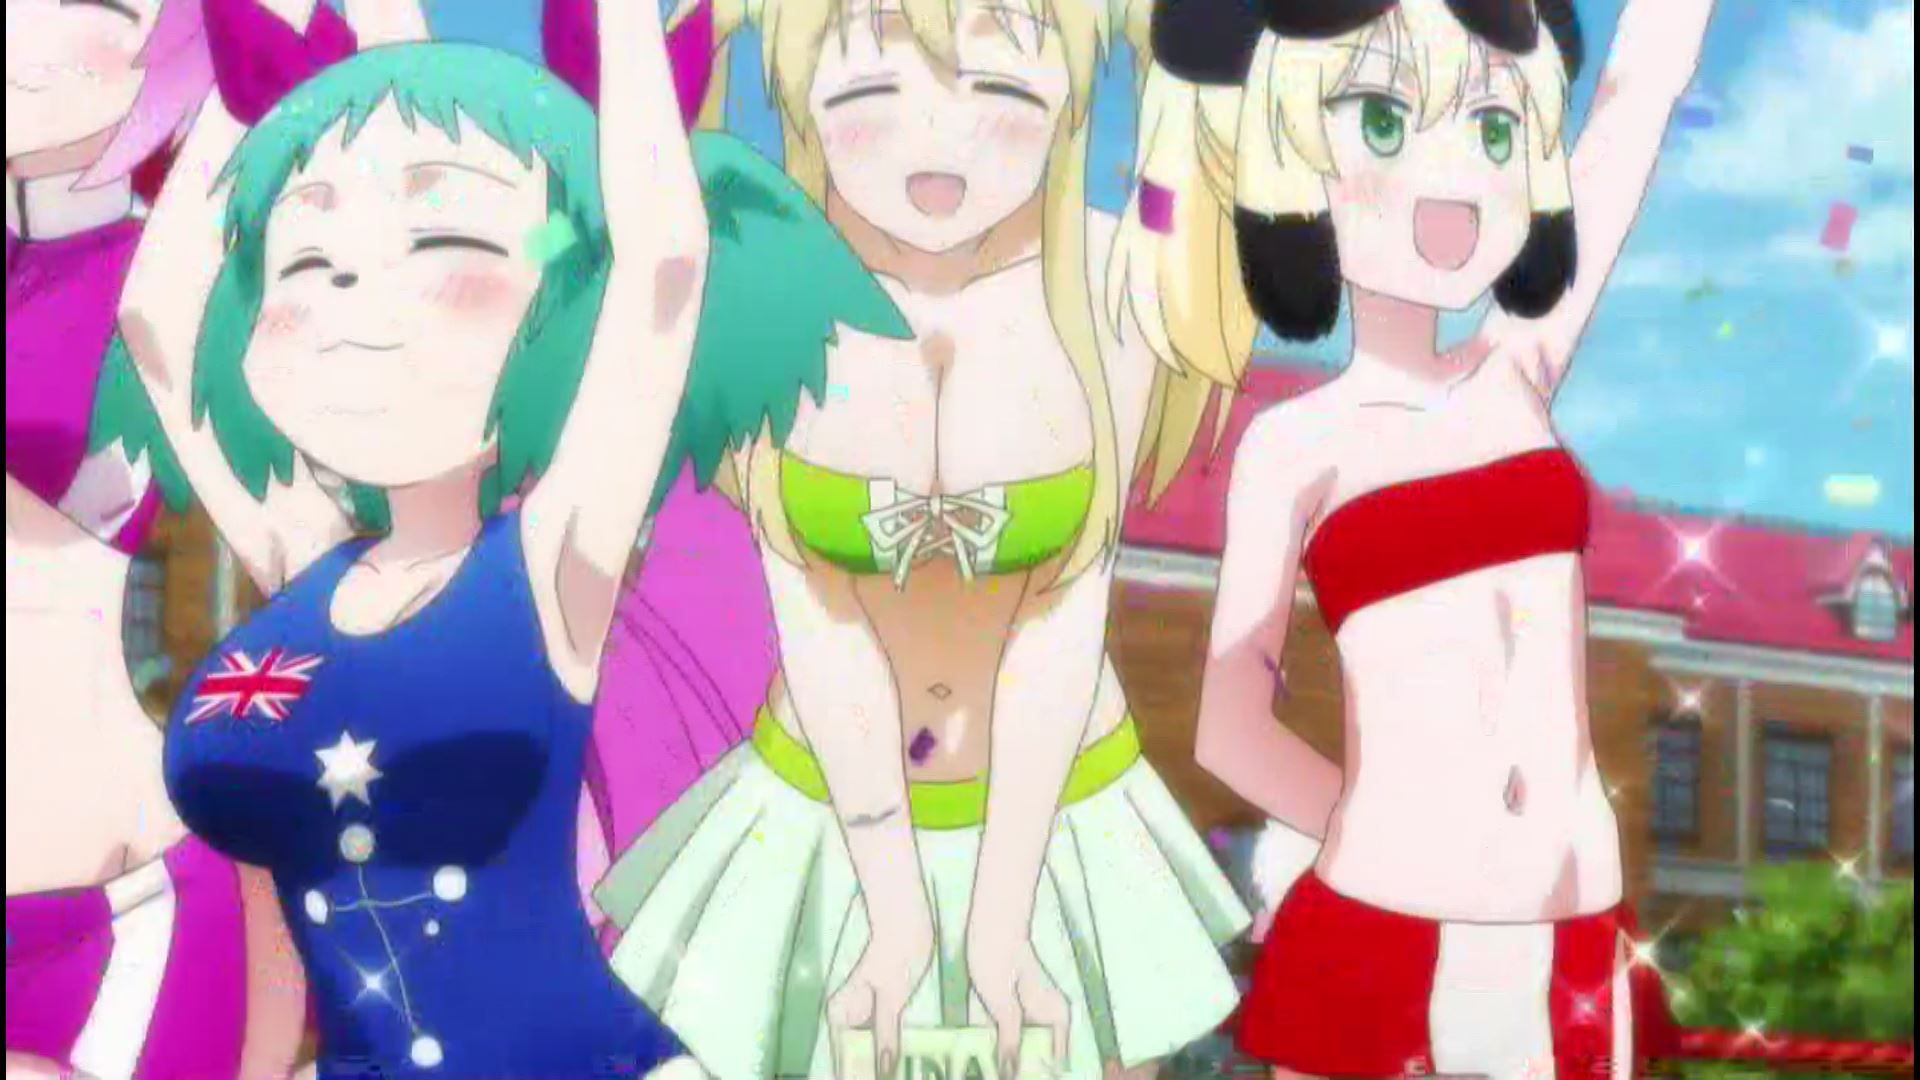 Anime [Shimarenuse] Seaton Gakuen] scene that girls become insanely erotic costumes in episode 12 18